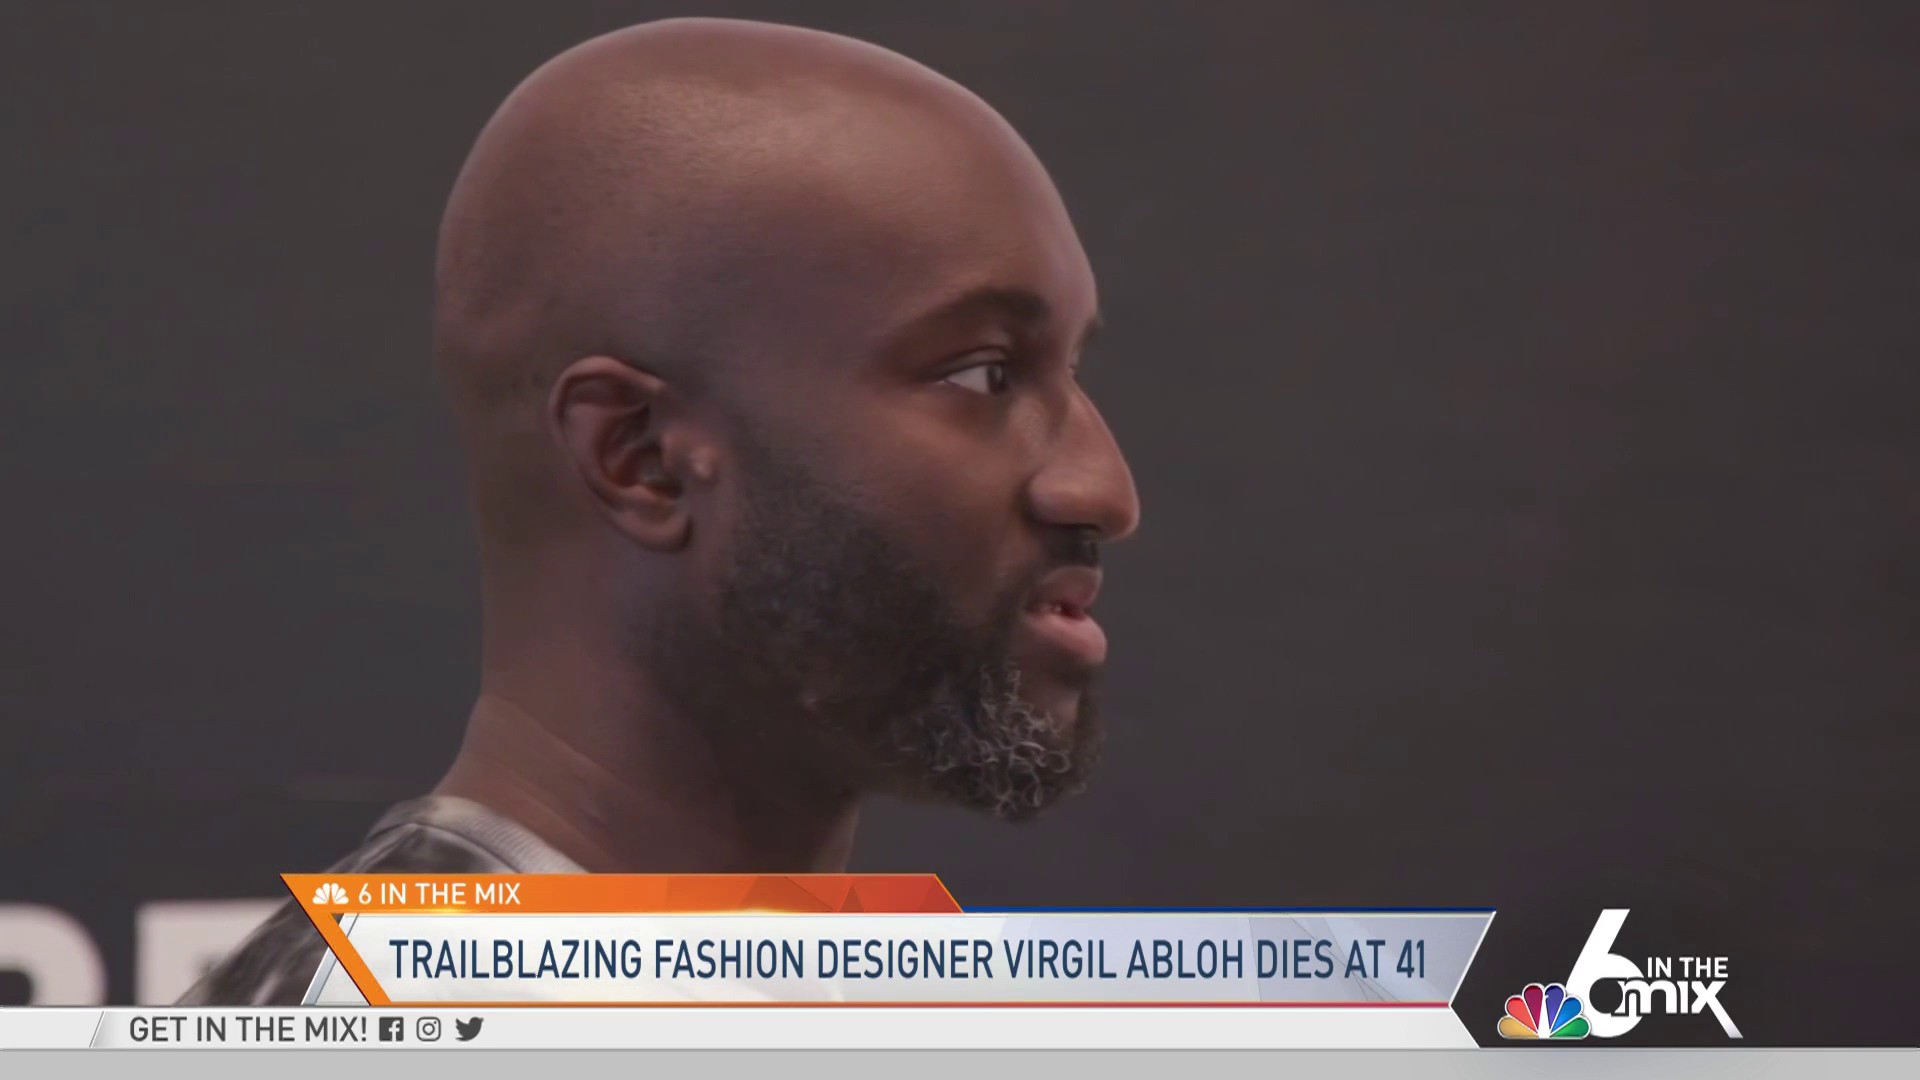 Designer Virgil Abloh dies at 41